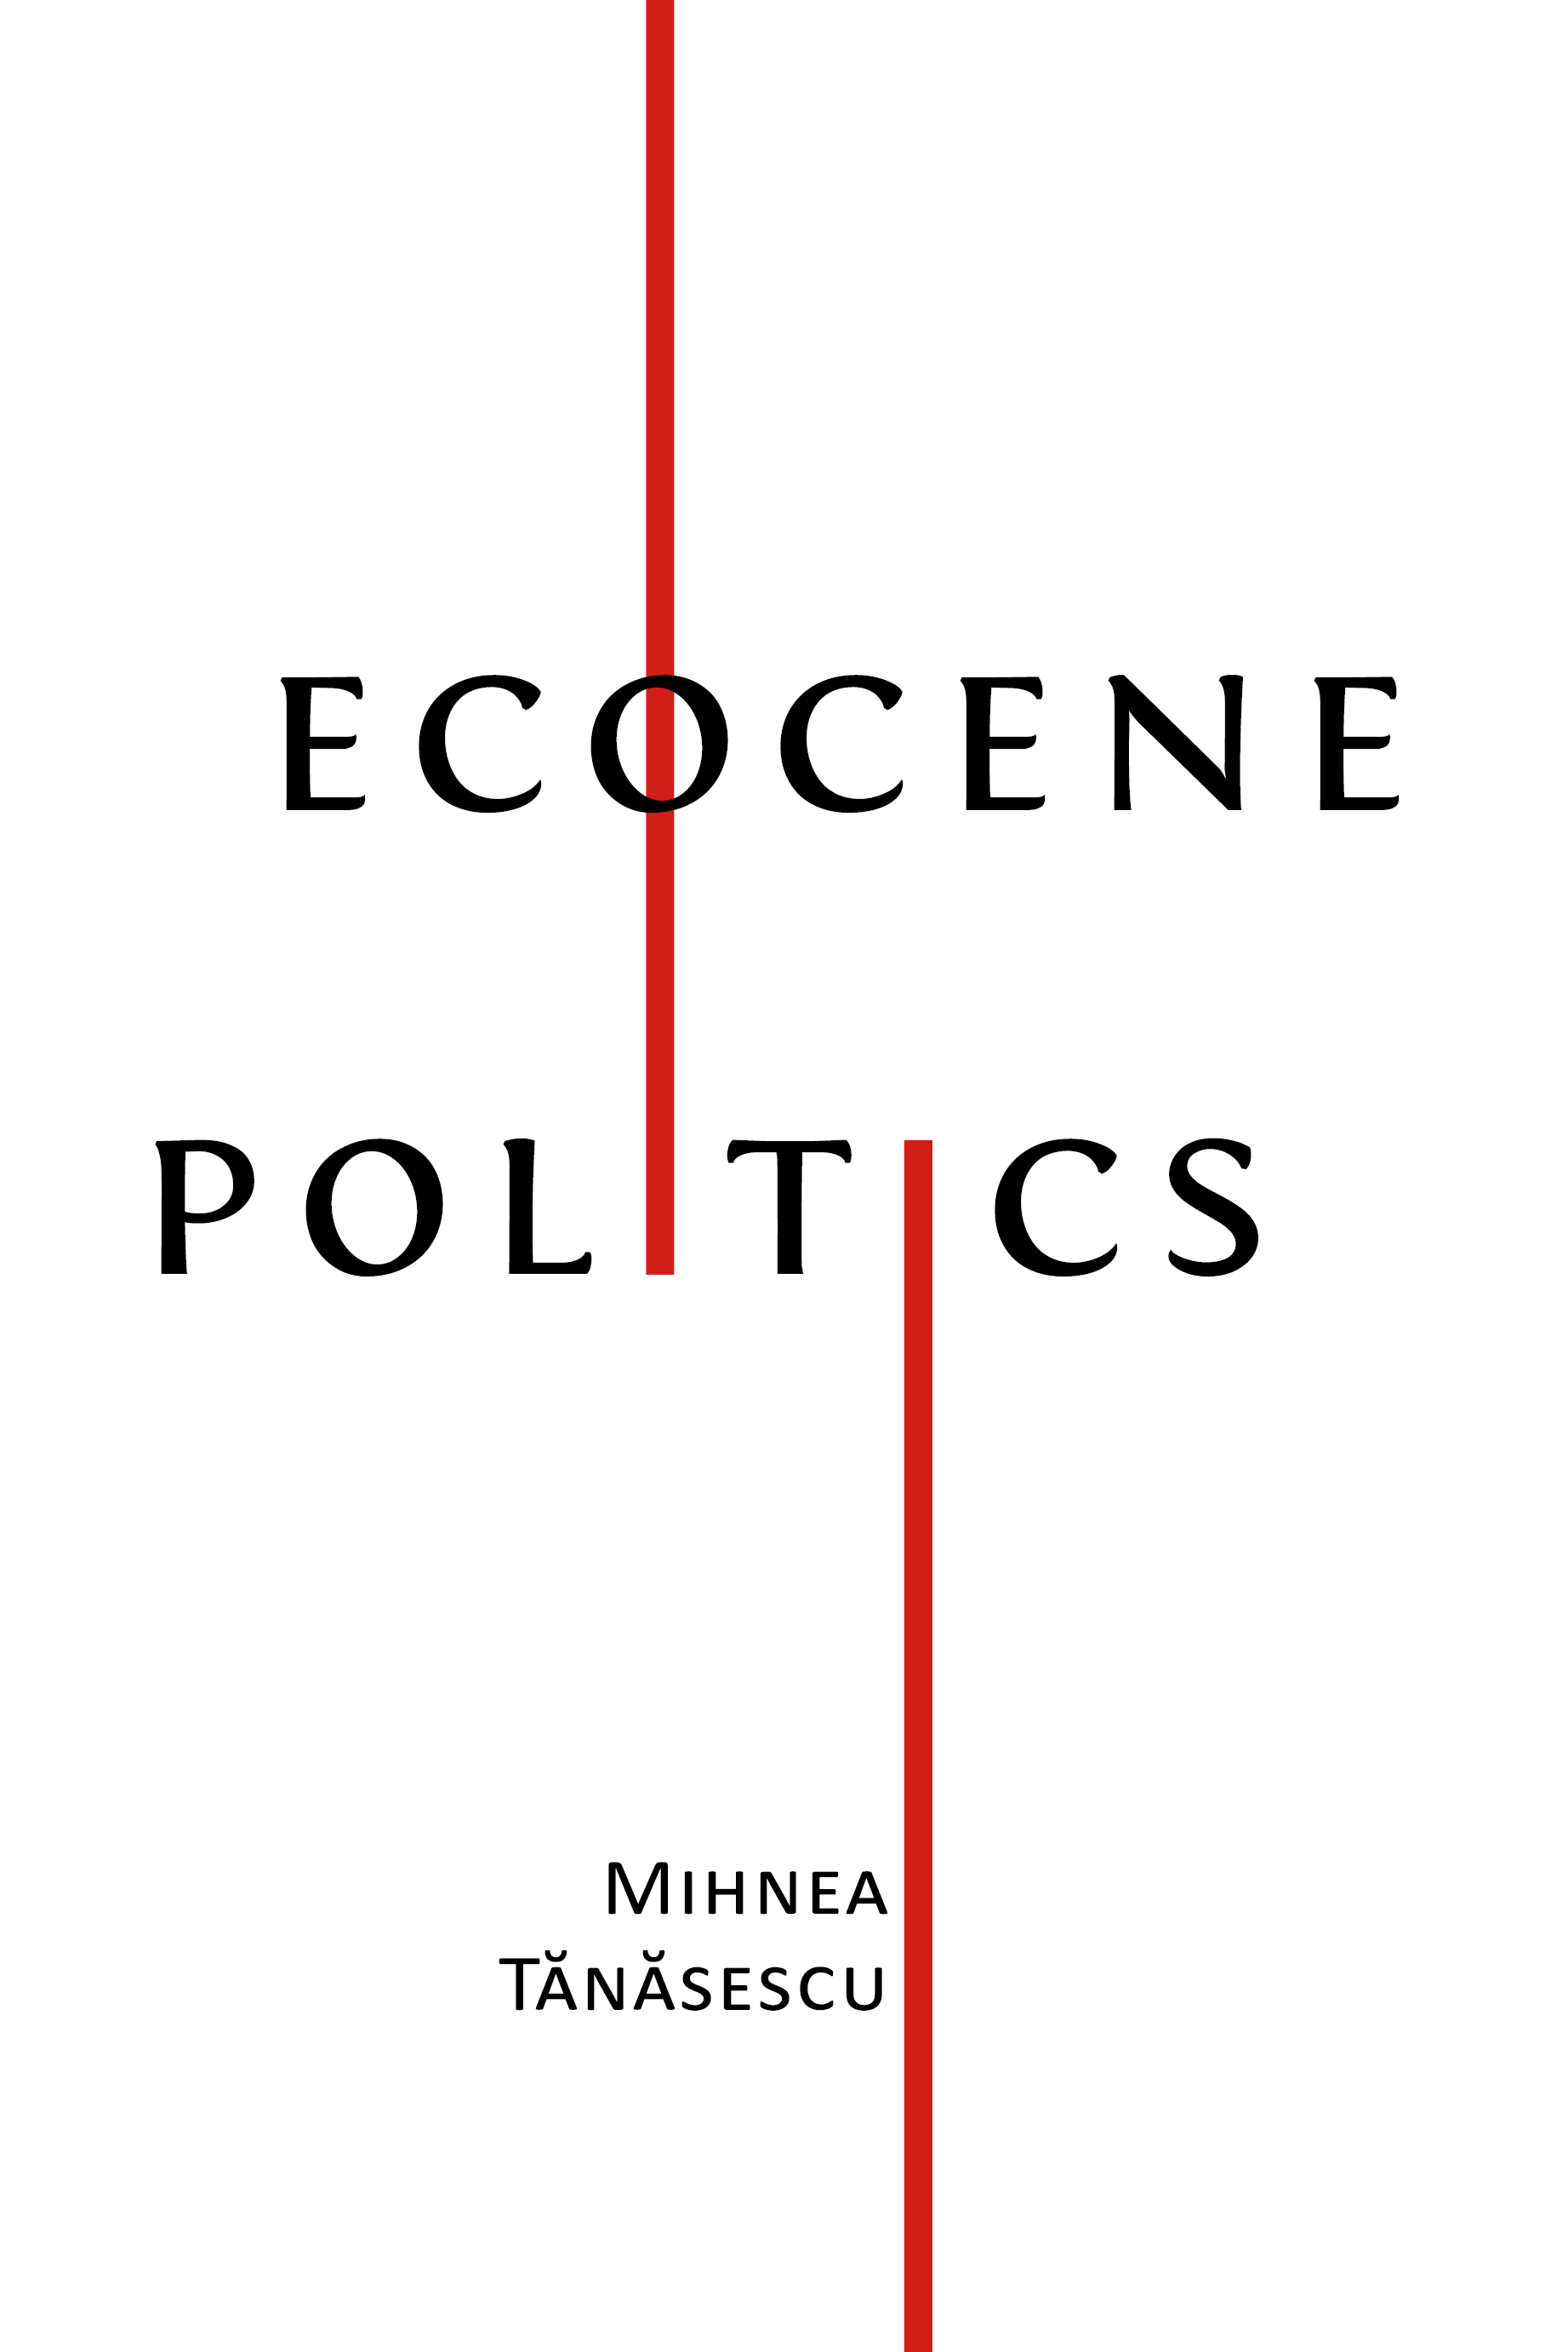 Ecocene Politics book cover image